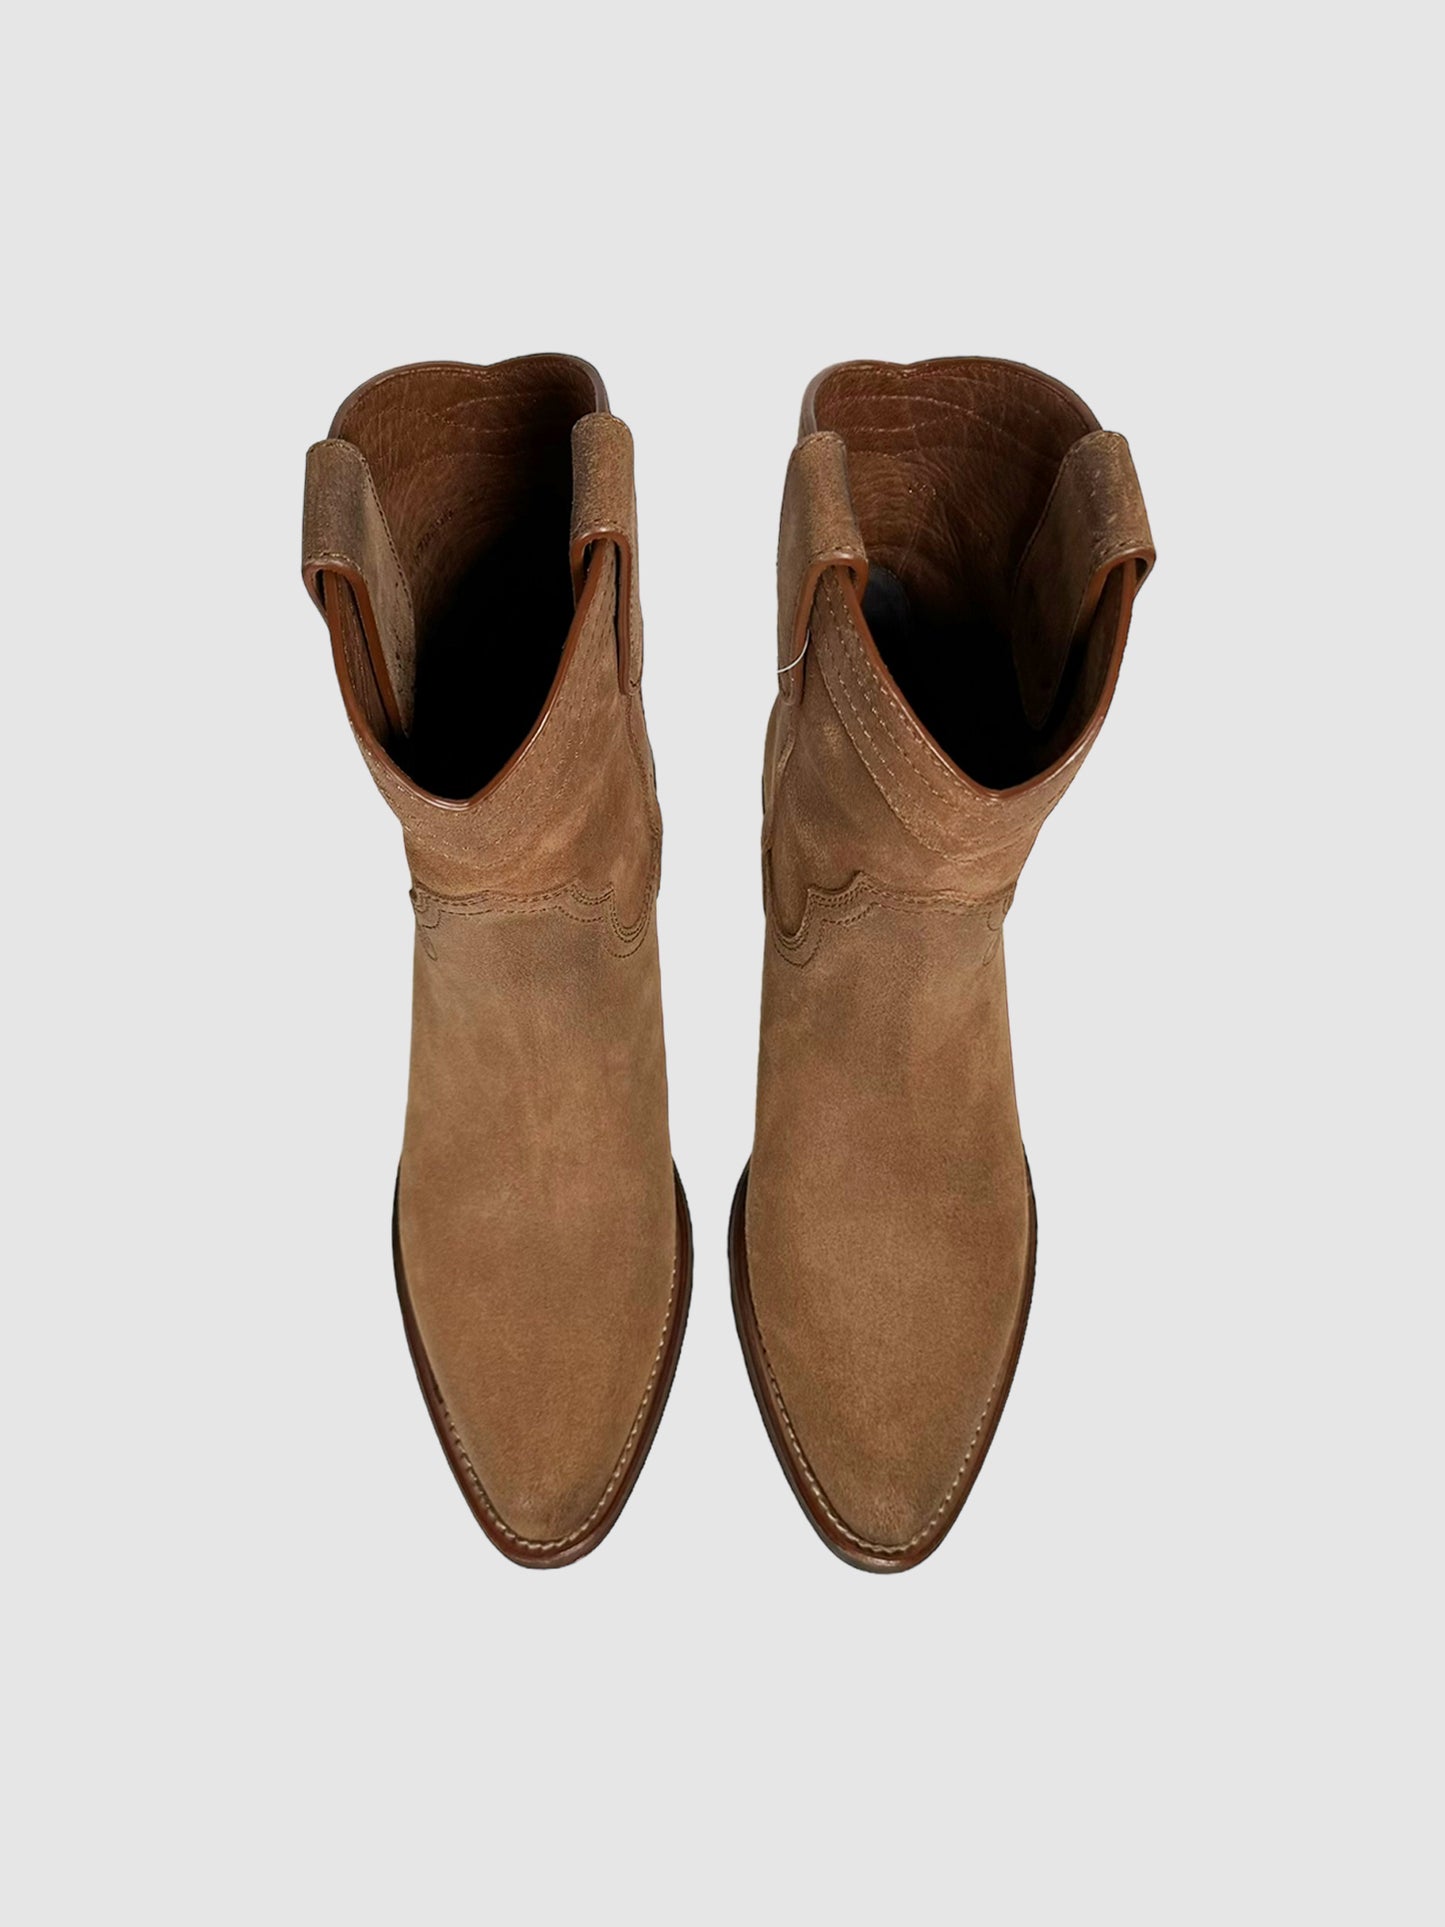 Eastwood Santiag Boots - Size 37